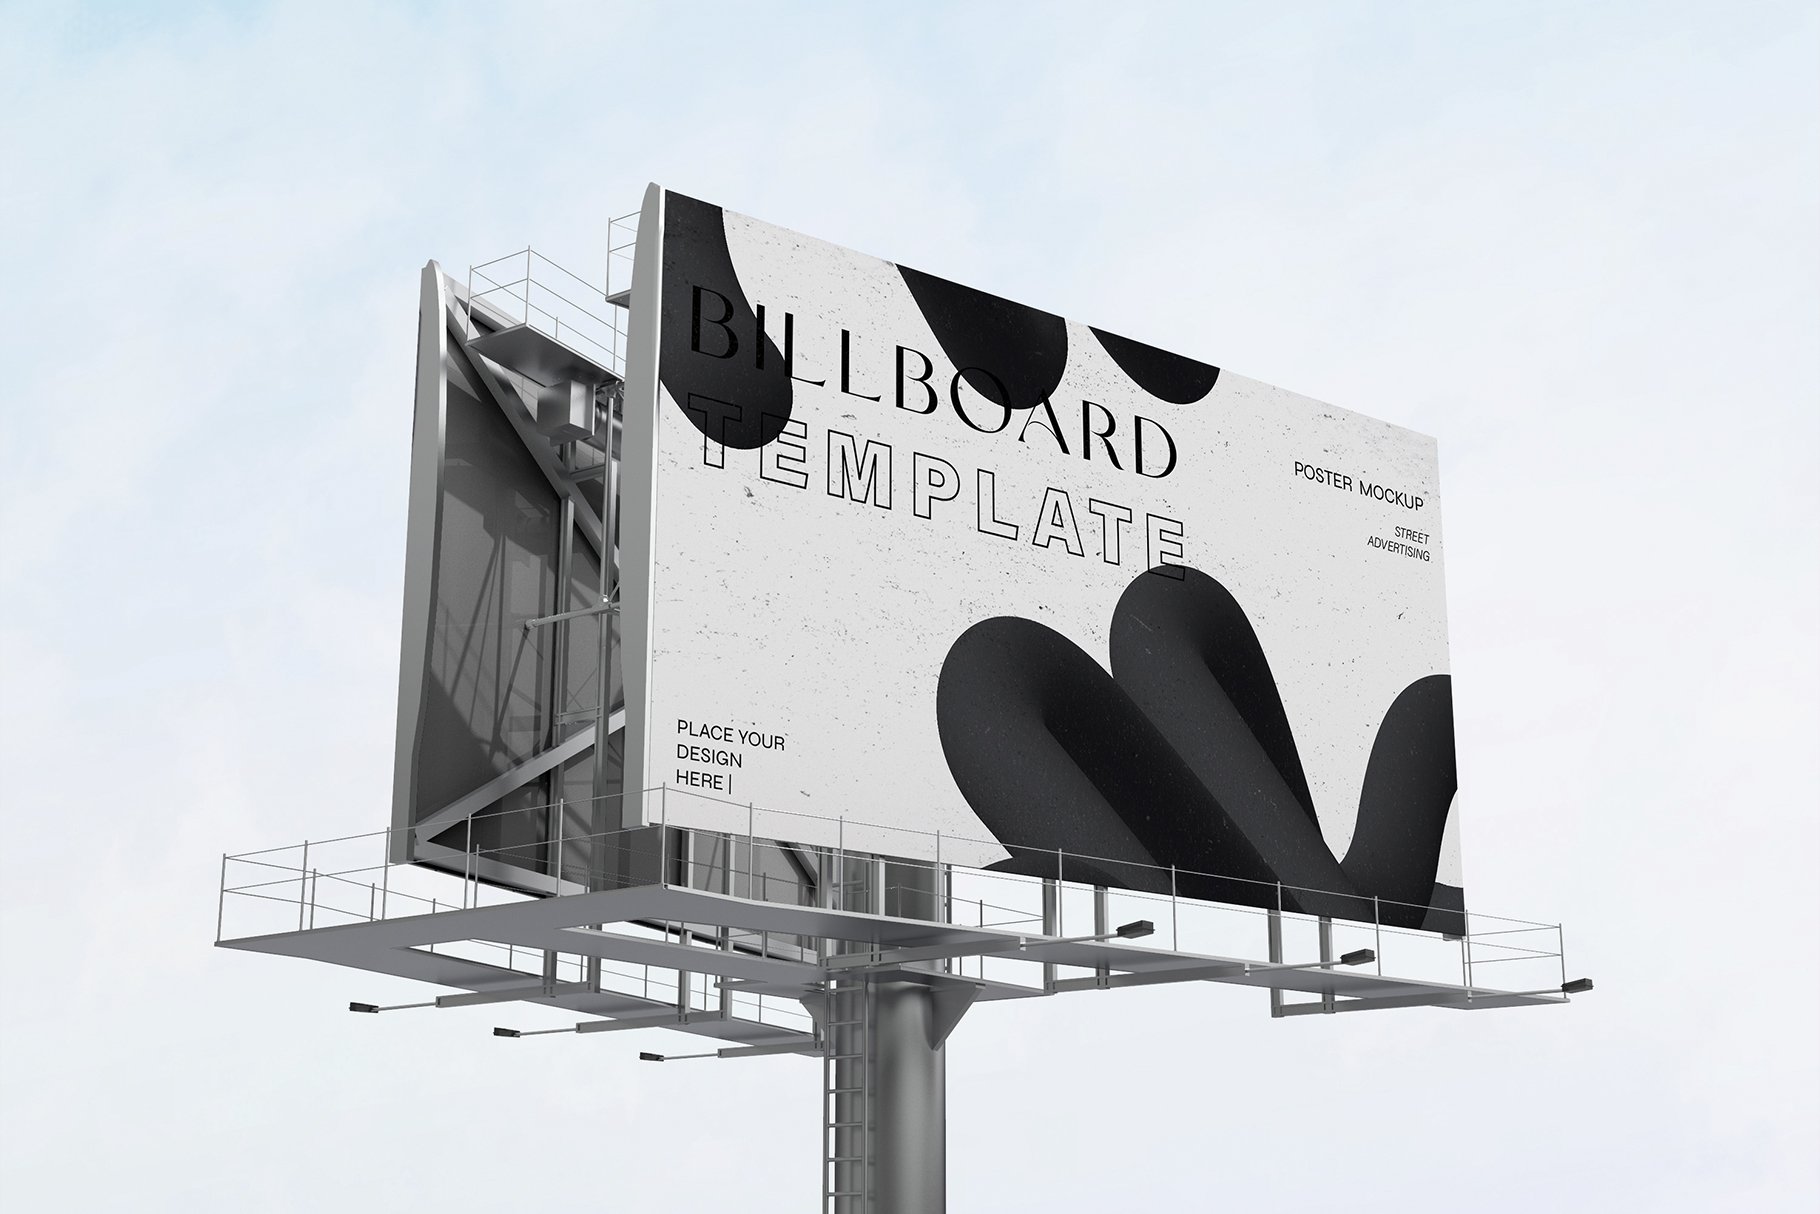 3d Advertising Billboard Mockup cover image.